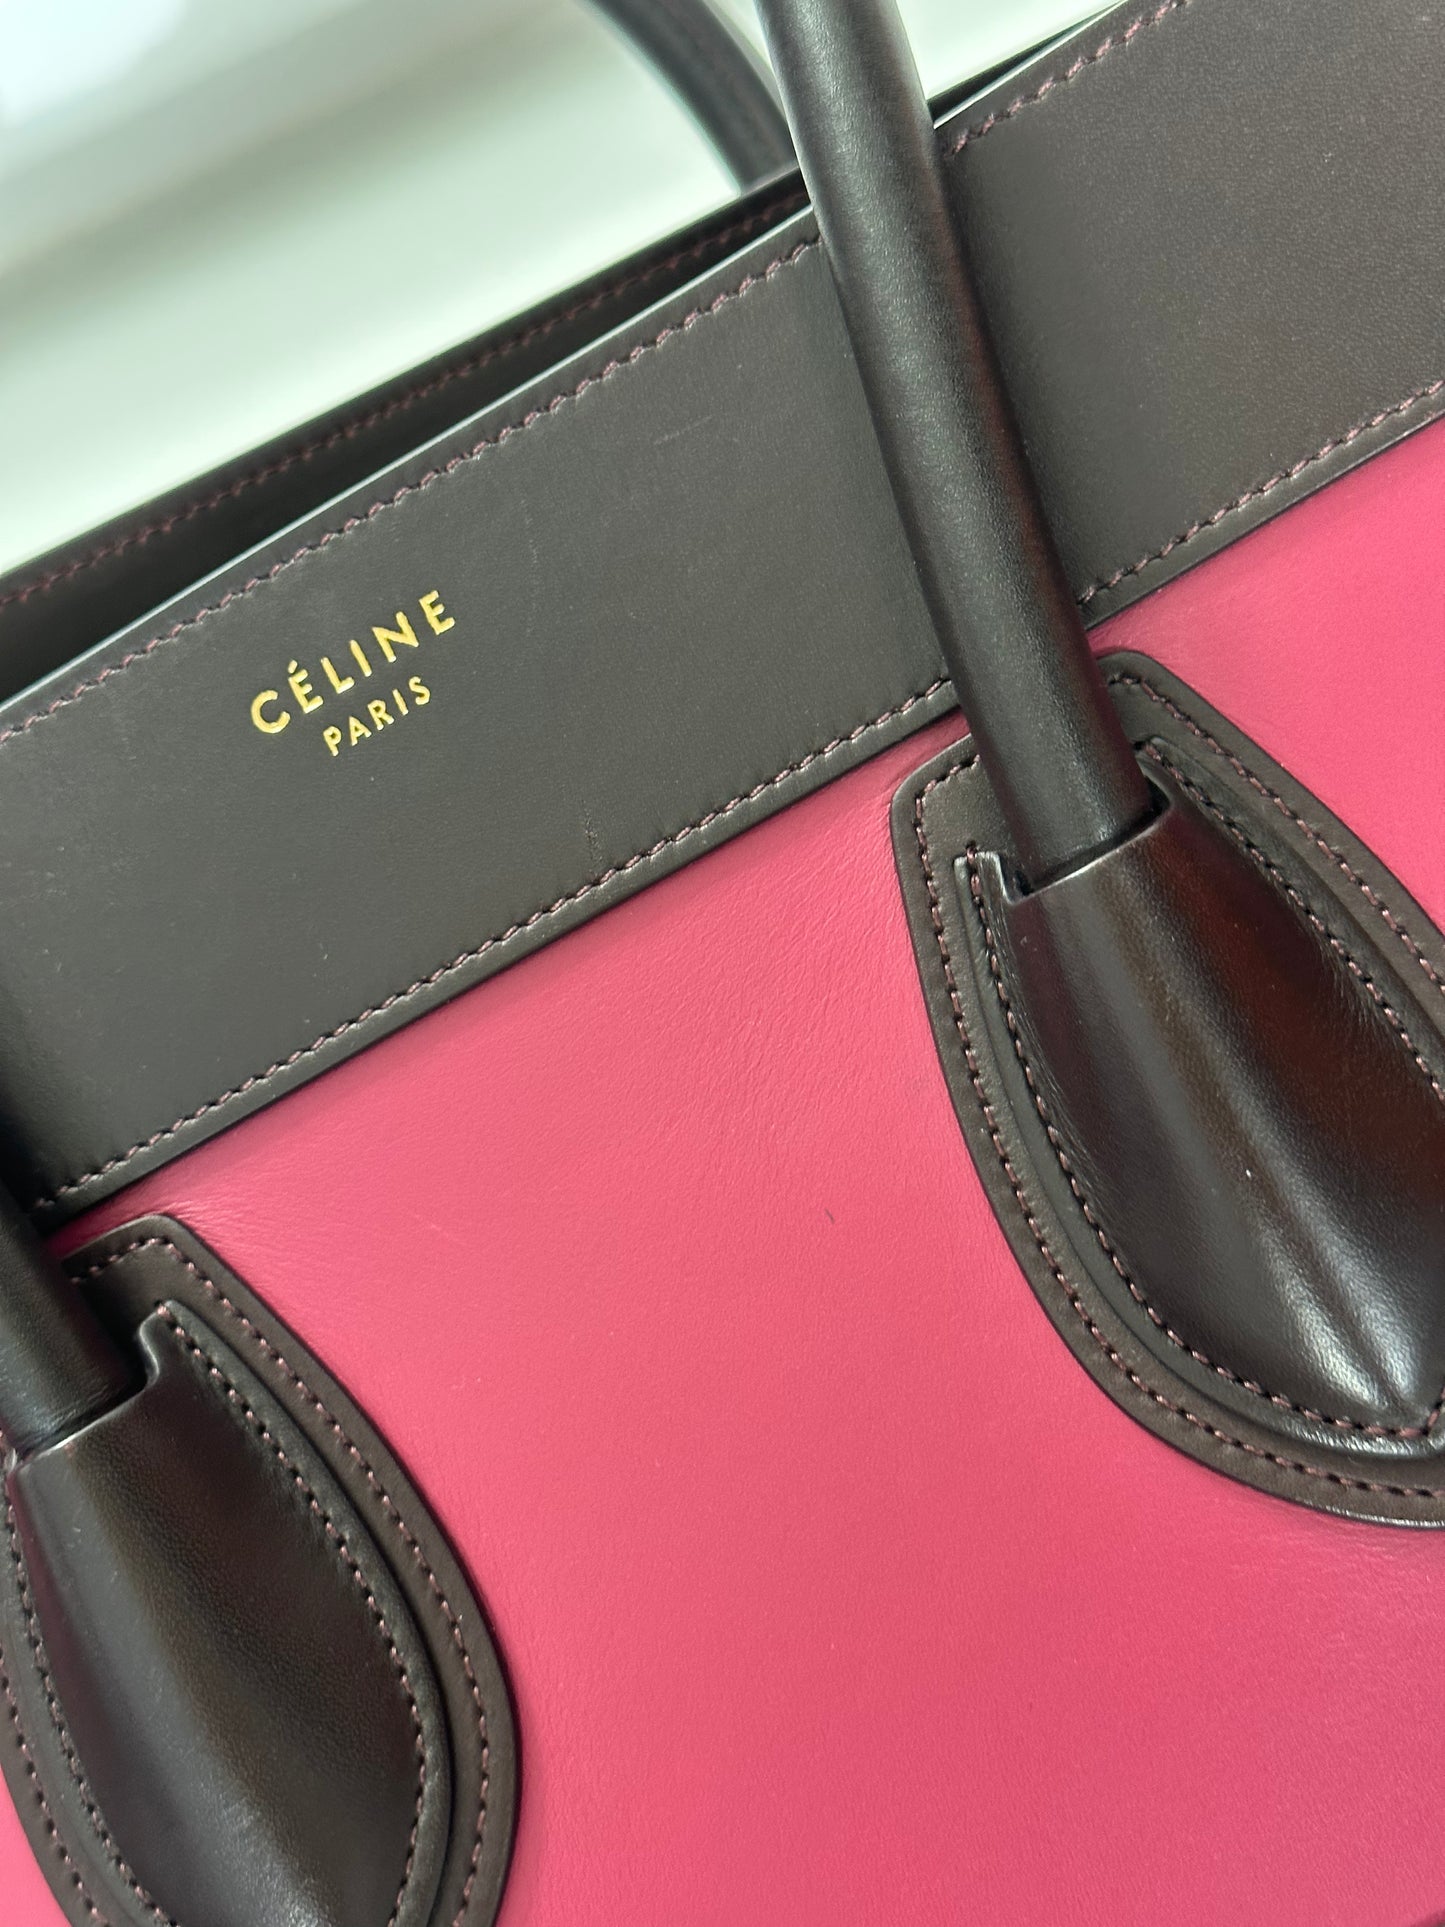 Celine Luggage Large Pink